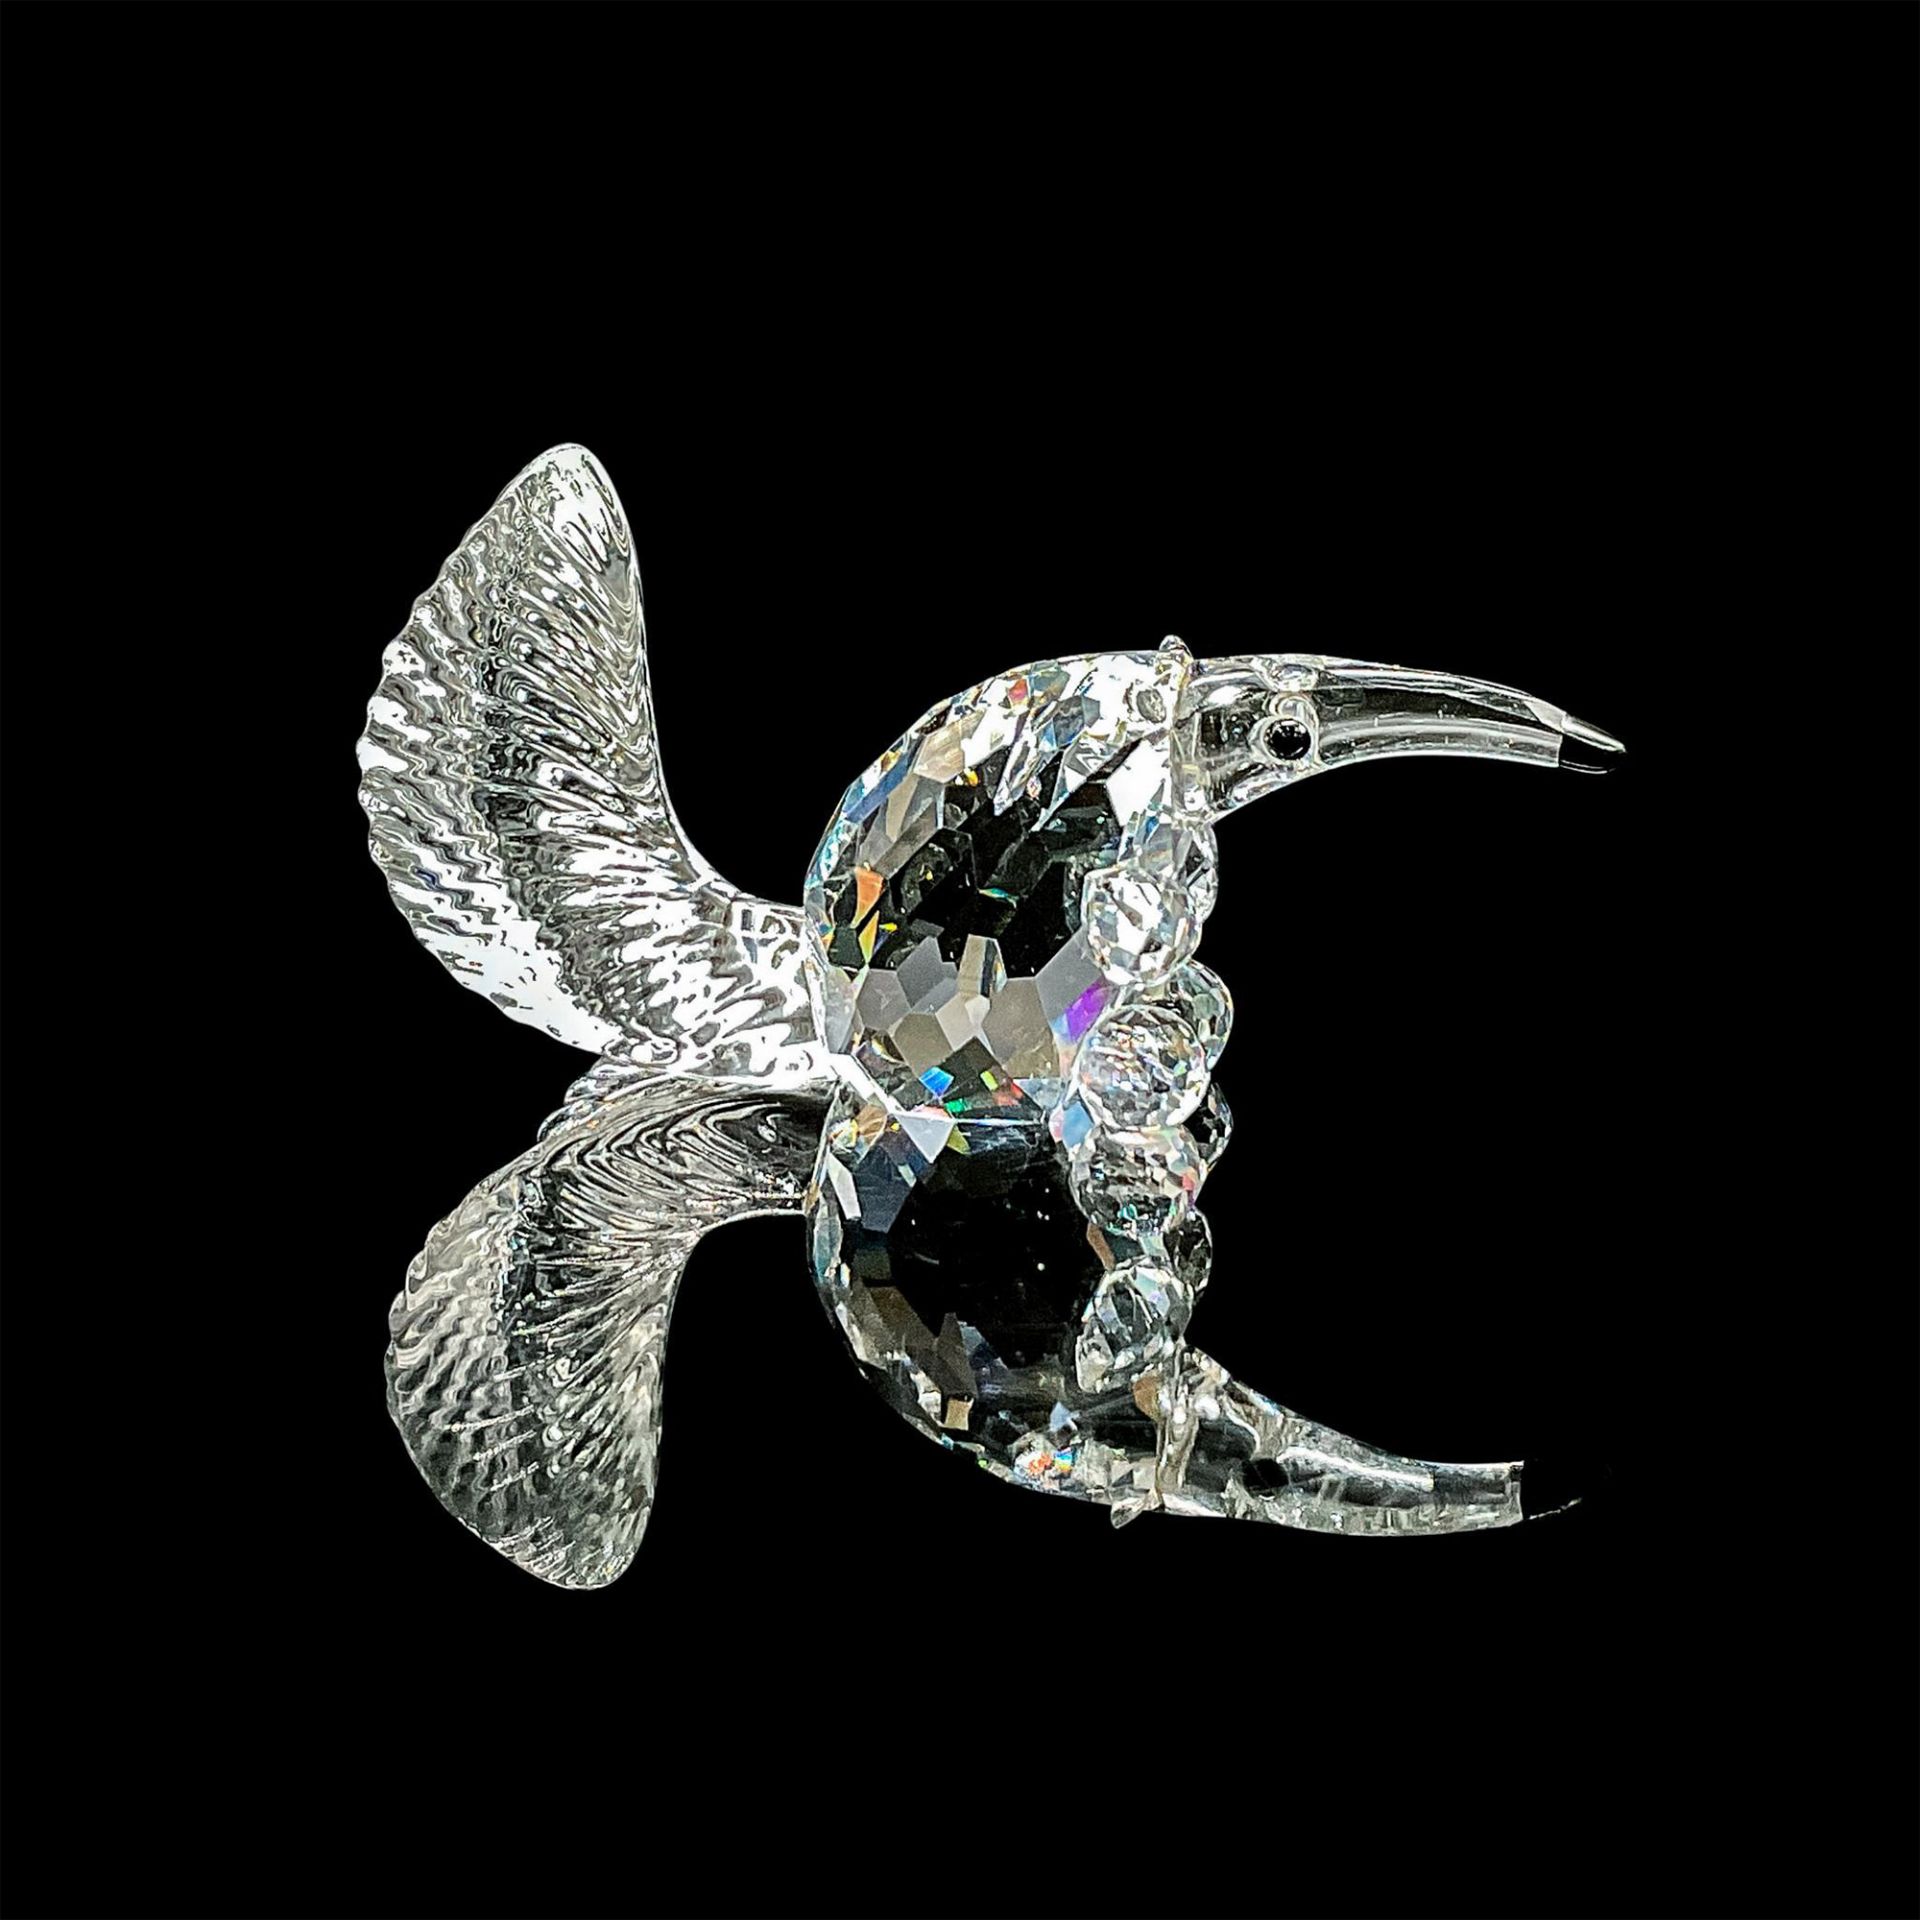 Swarovski Silver Crystal Figurine, Anteater - Image 2 of 4